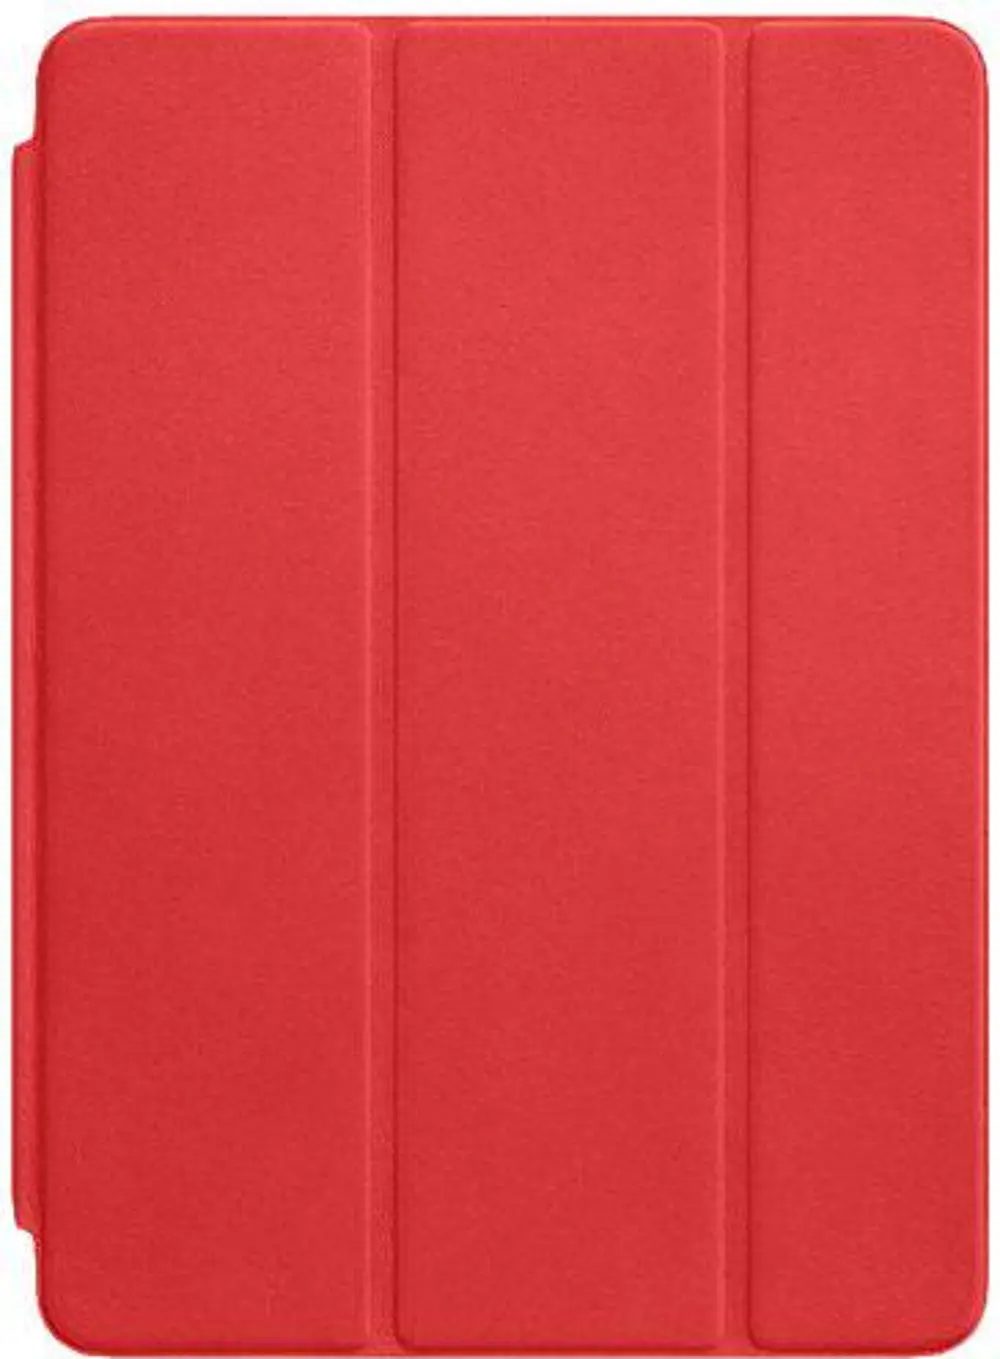 MF052LL/A iPad Air Smart Case - Red-1